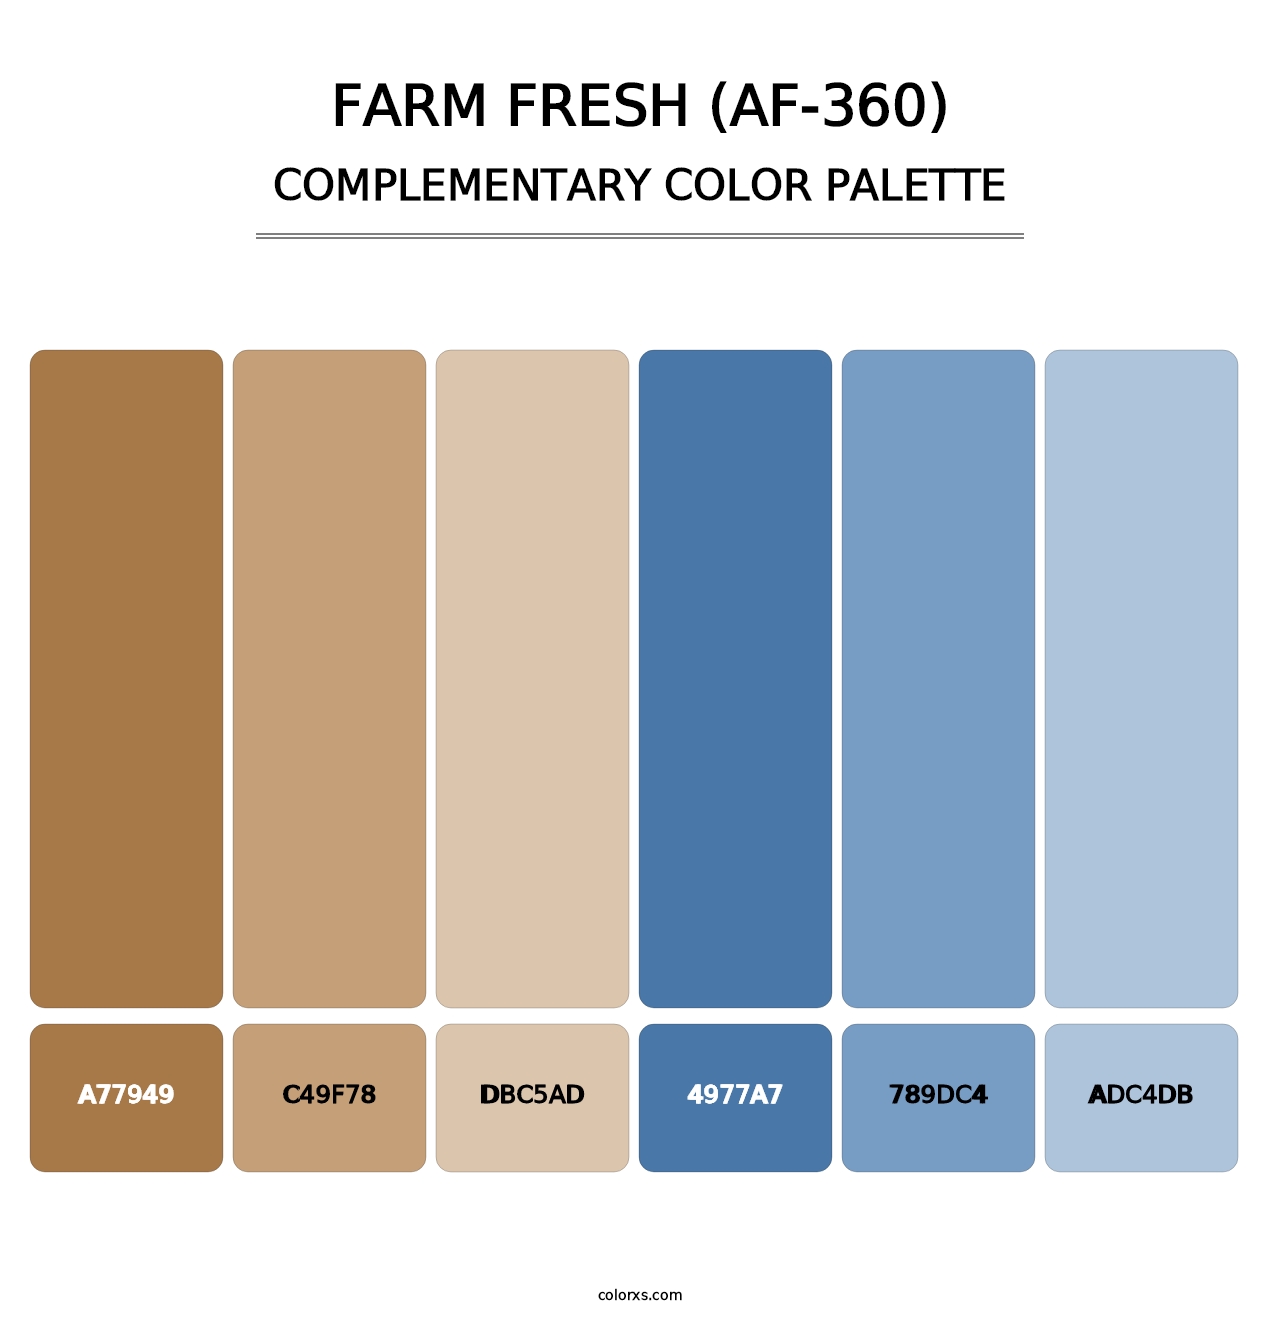 Farm Fresh (AF-360) - Complementary Color Palette